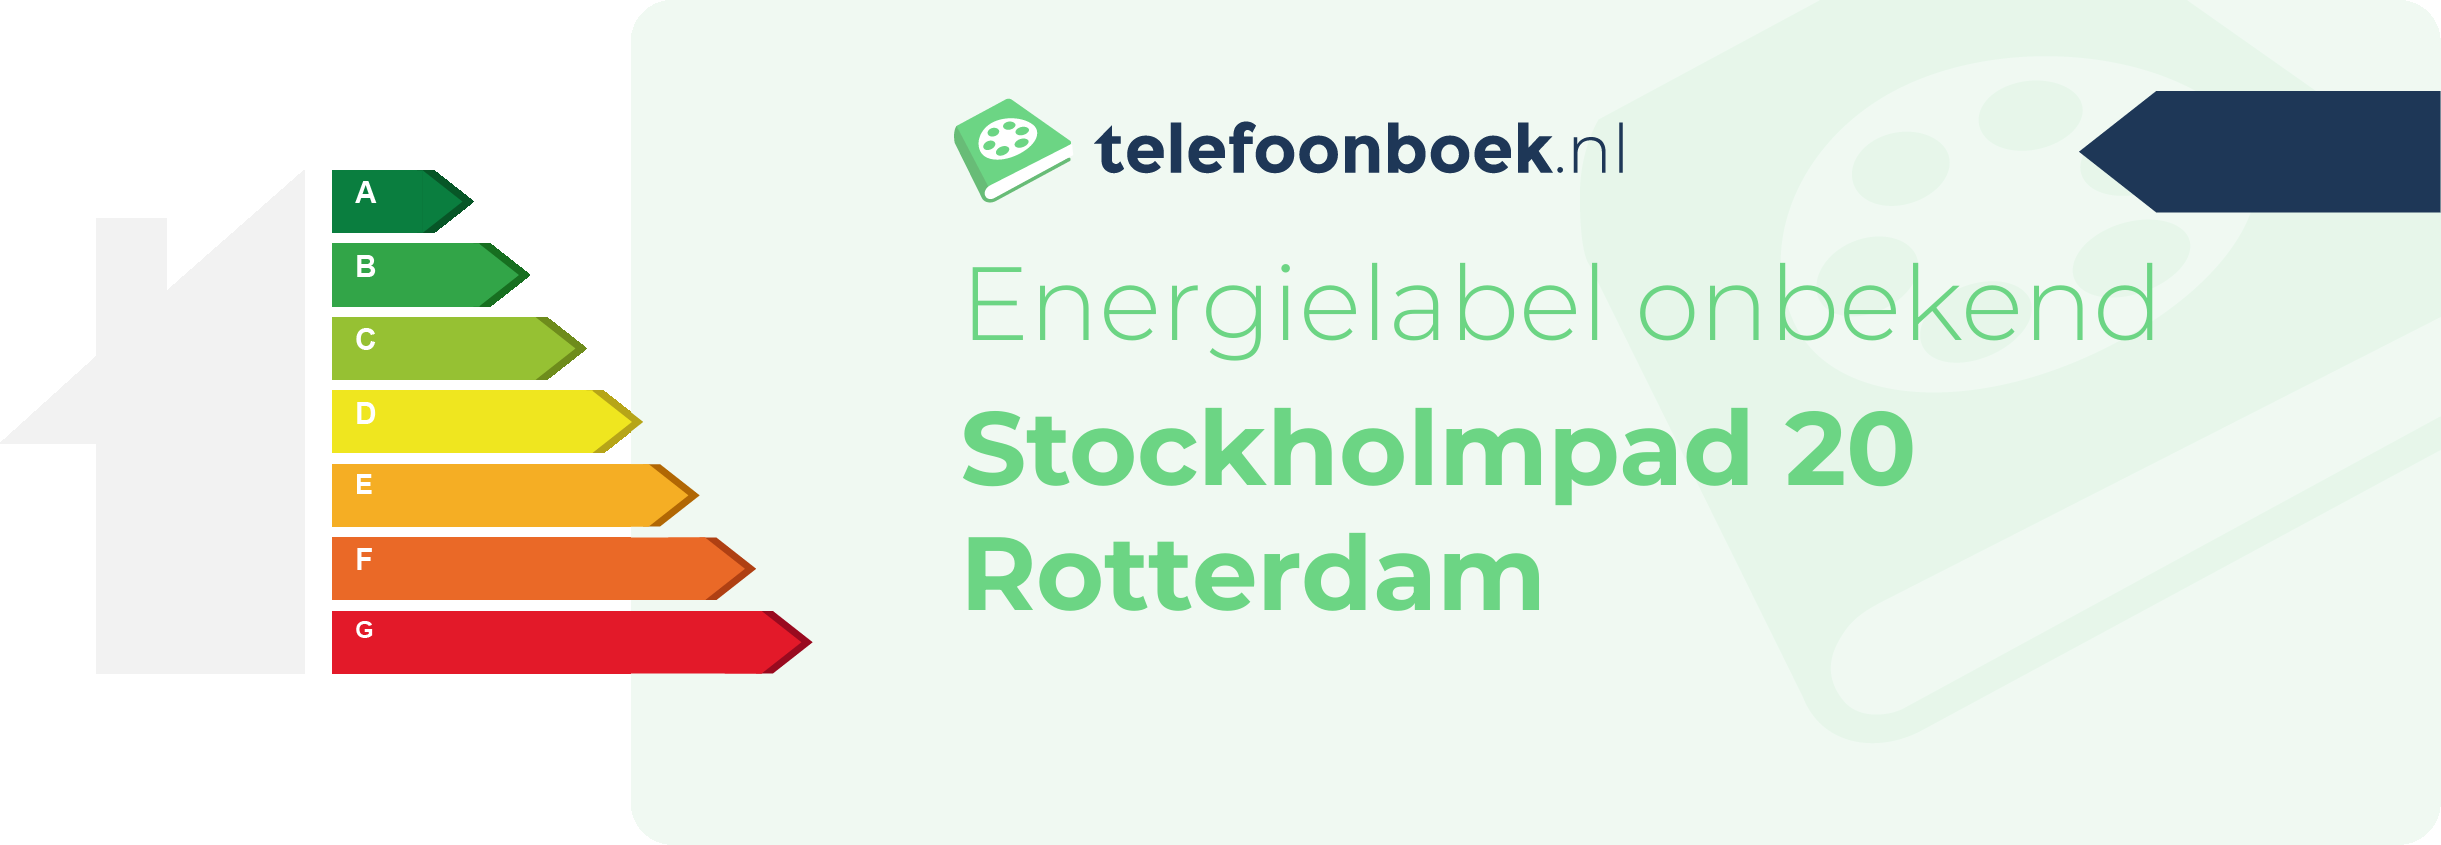 Energielabel Stockholmpad 20 Rotterdam